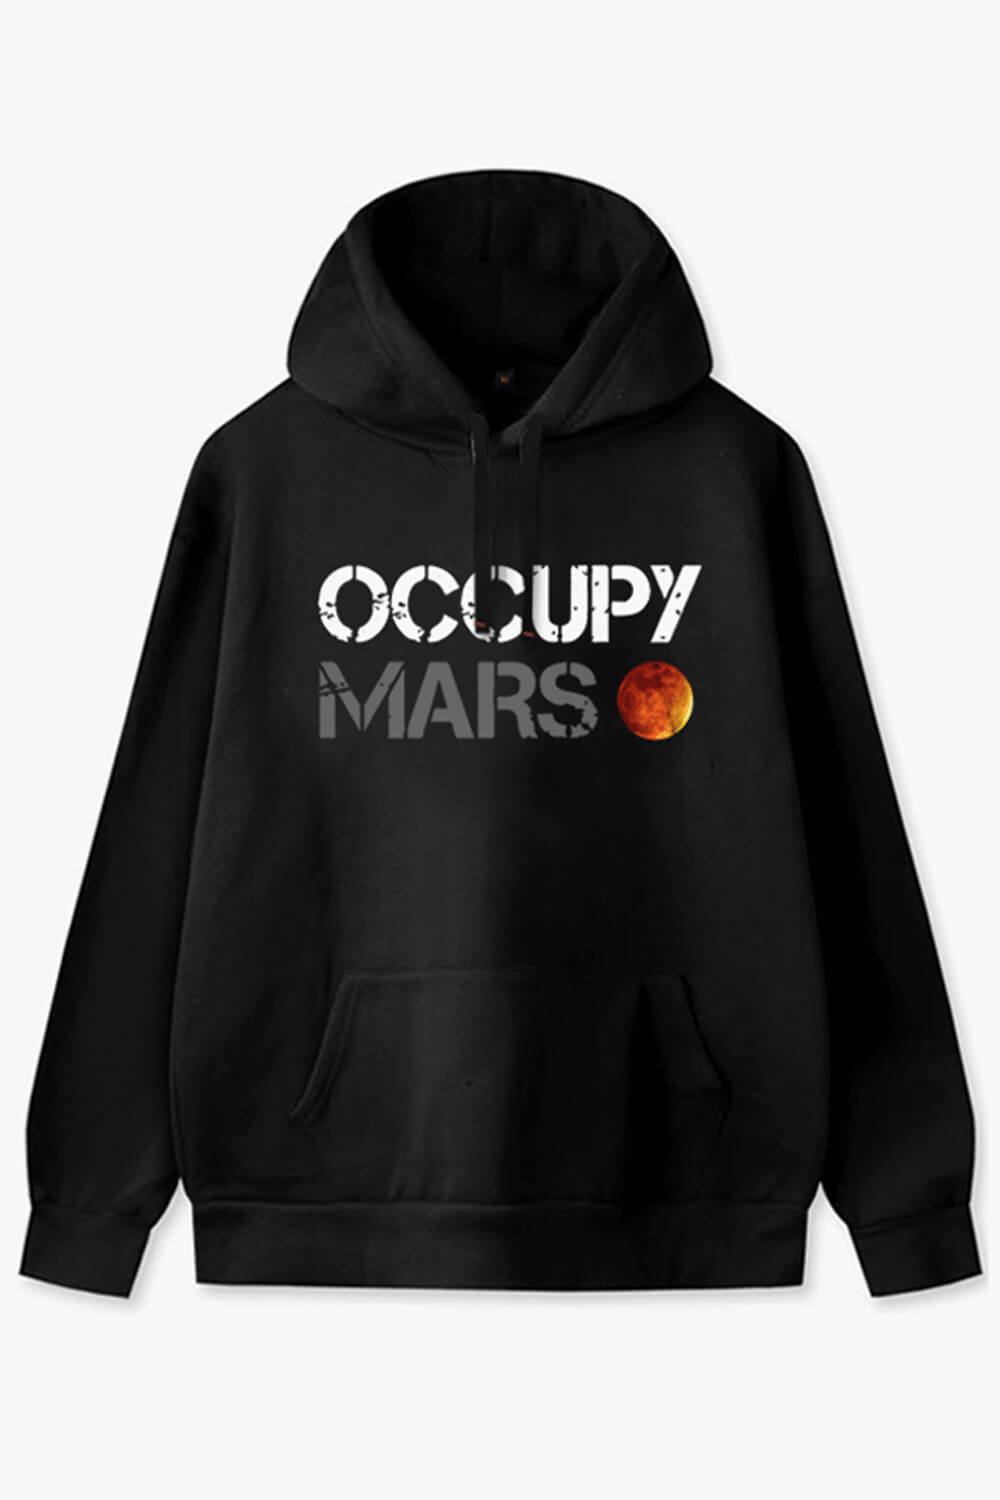 Occupy Mars Elon Musk Hoodie Unisex